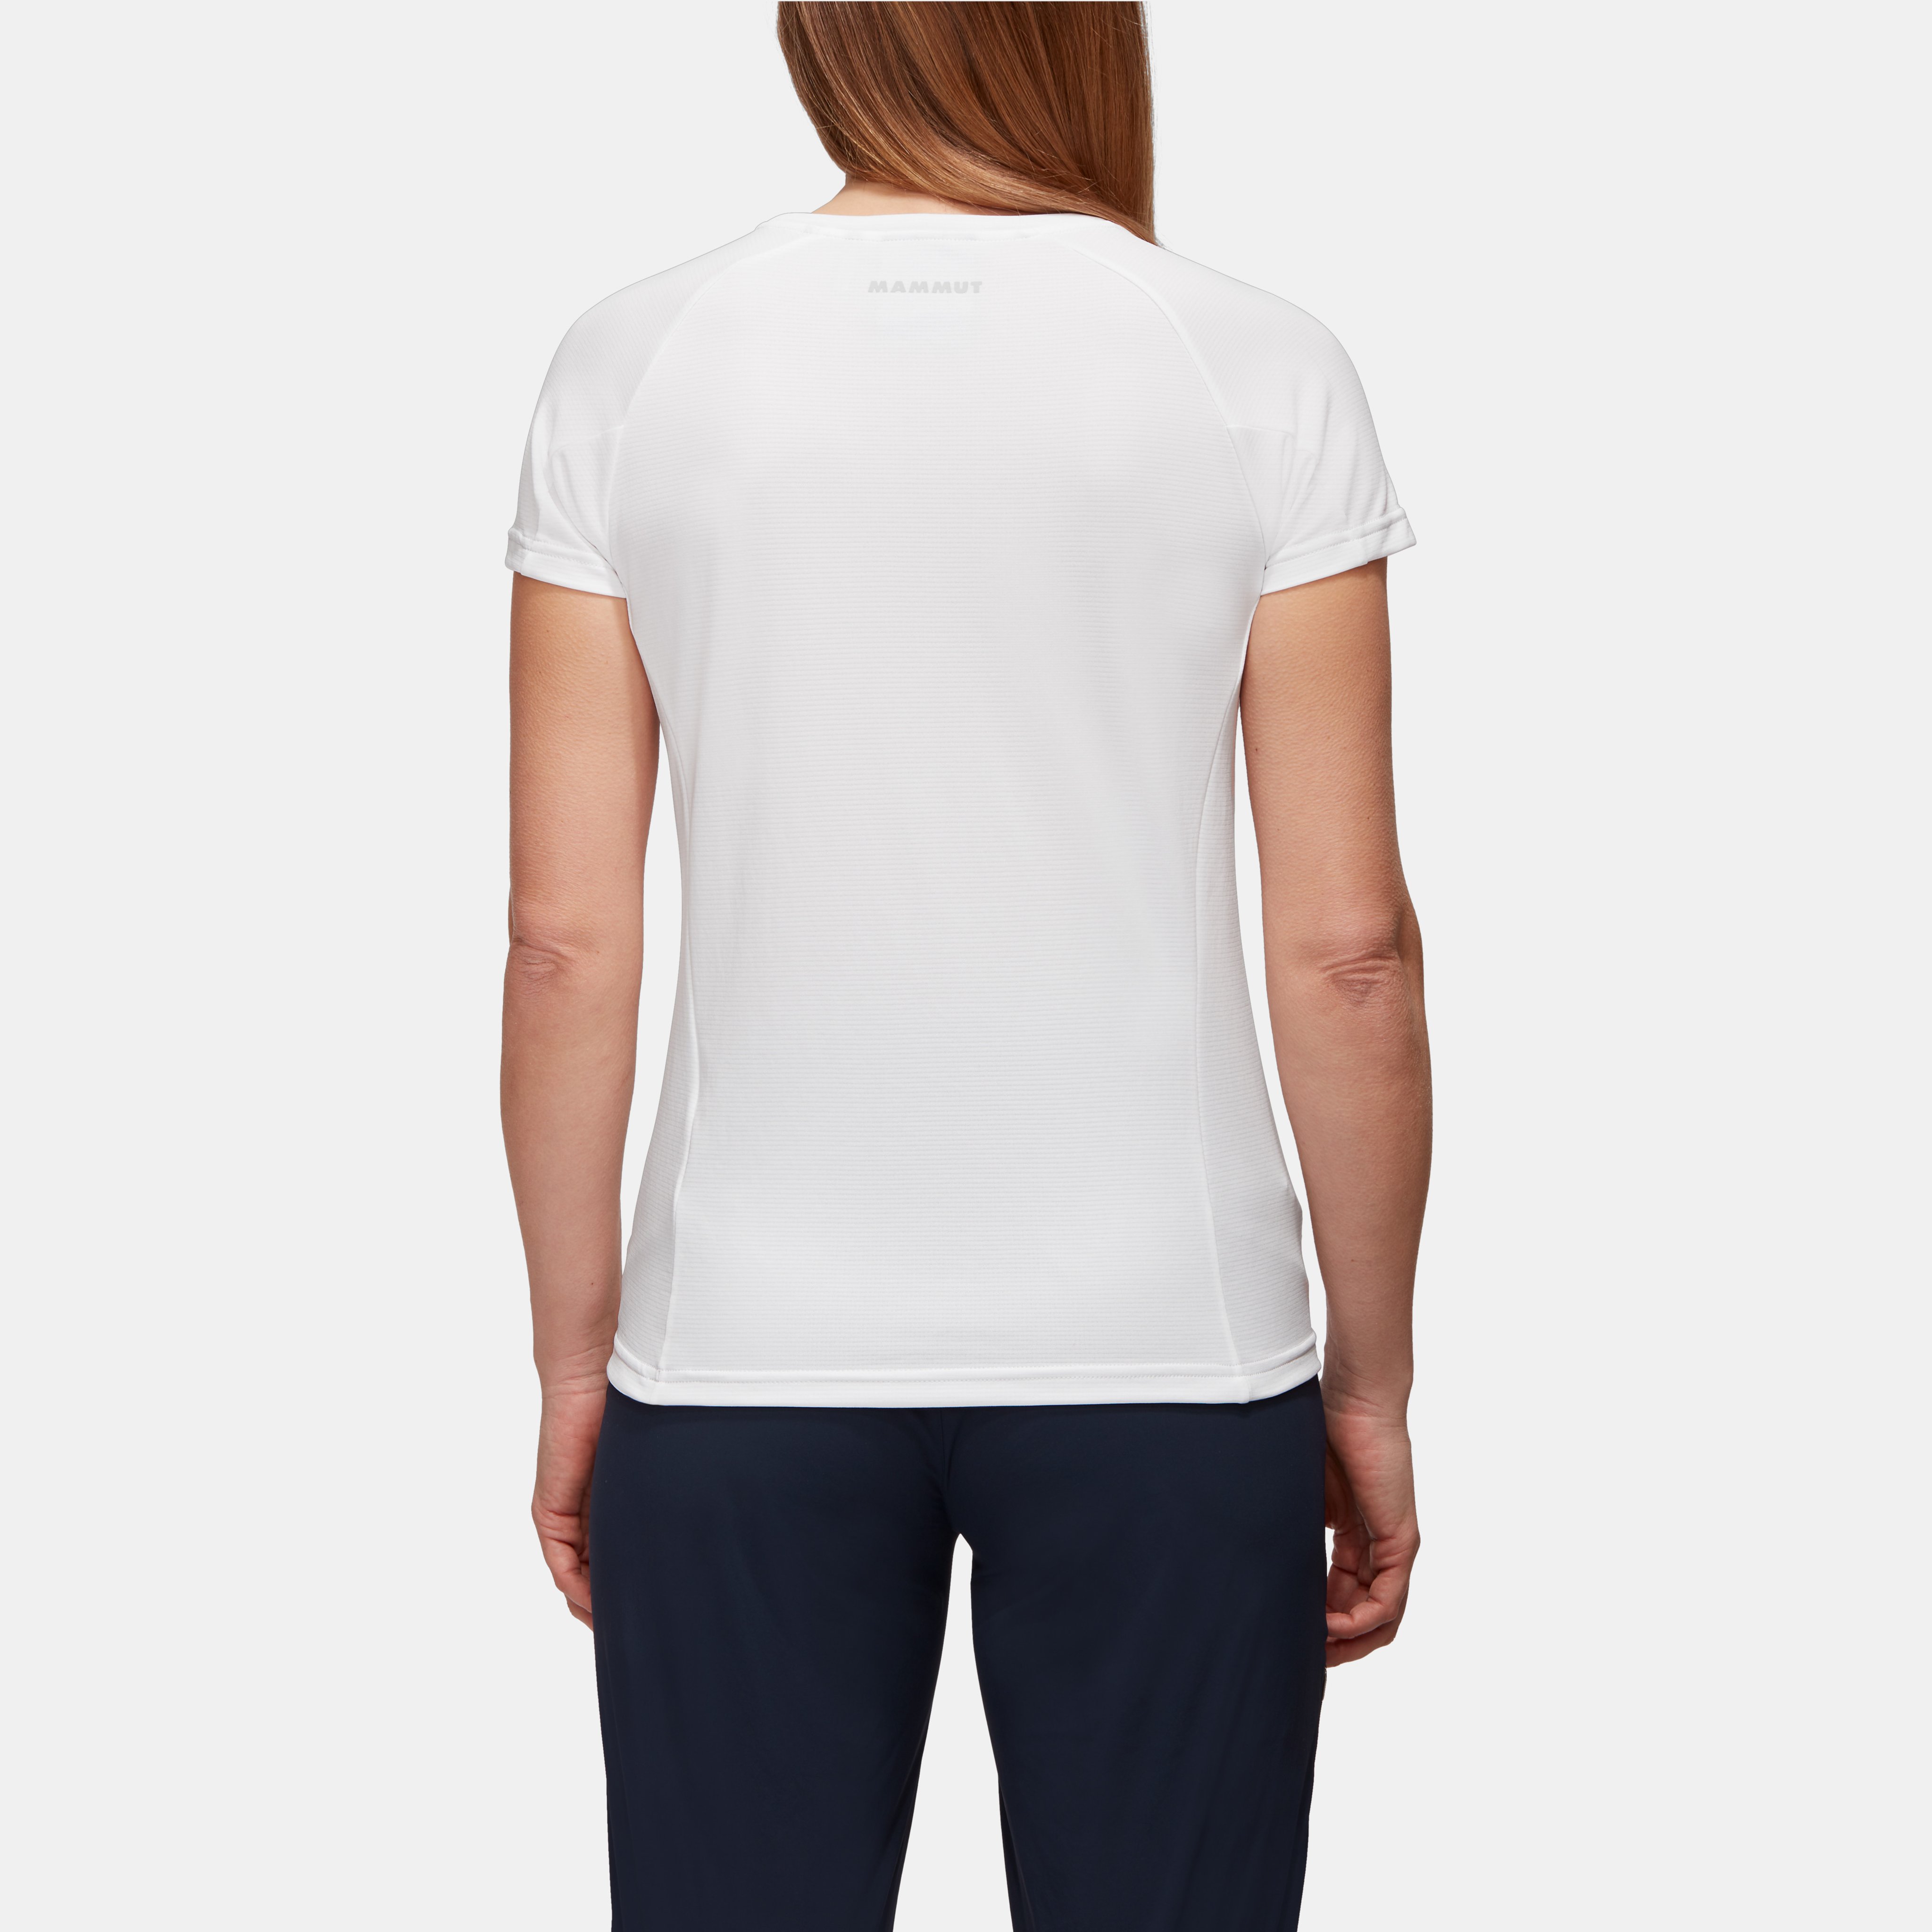 Aegility FL T-Shirt Women product image